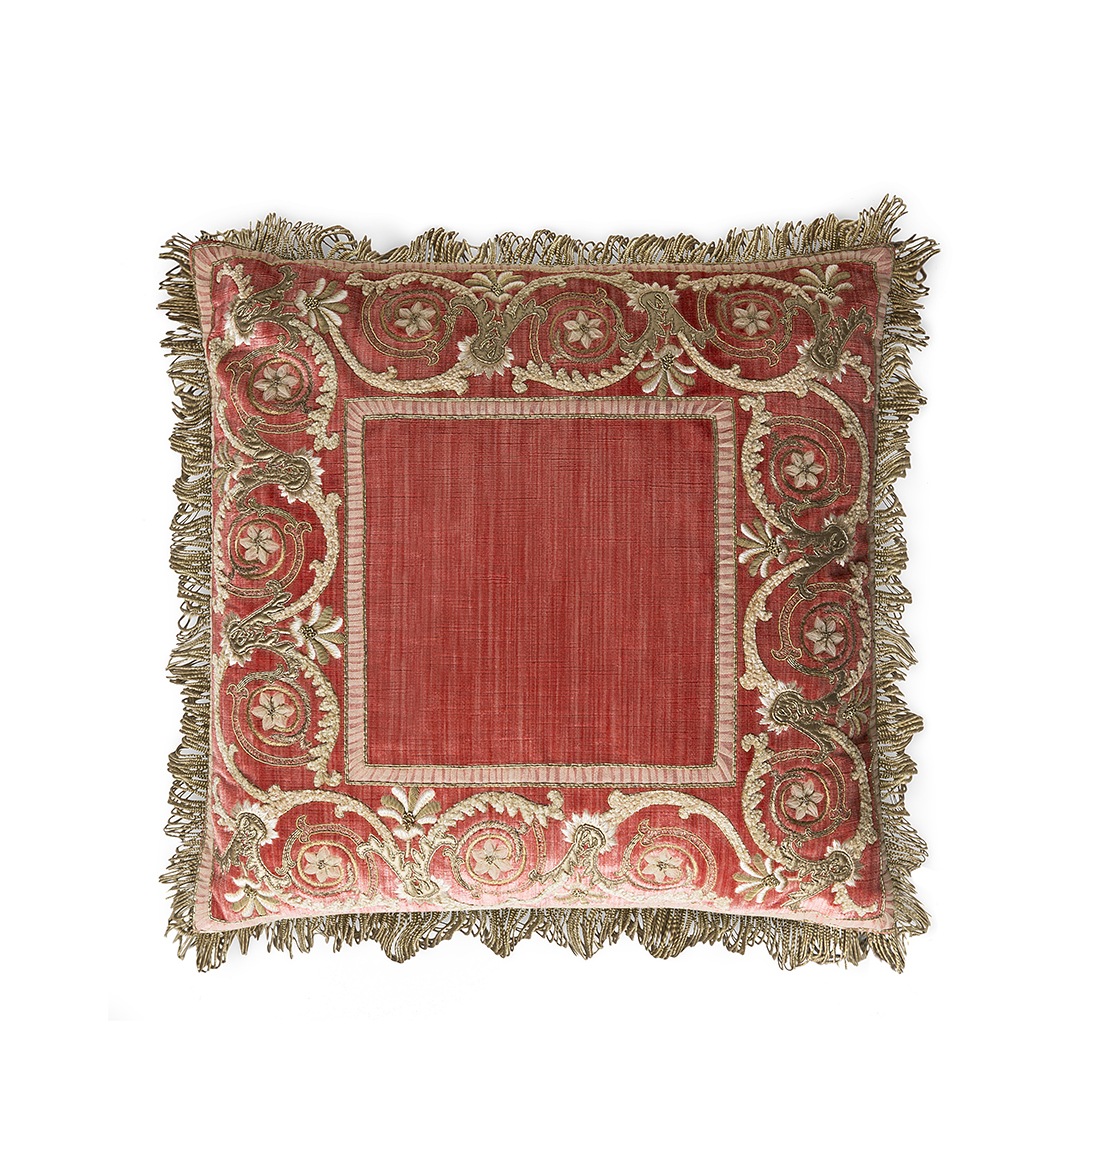 Sophia cushion in Como silk velvet - Pompeiian red - Beaumont & Fletcher